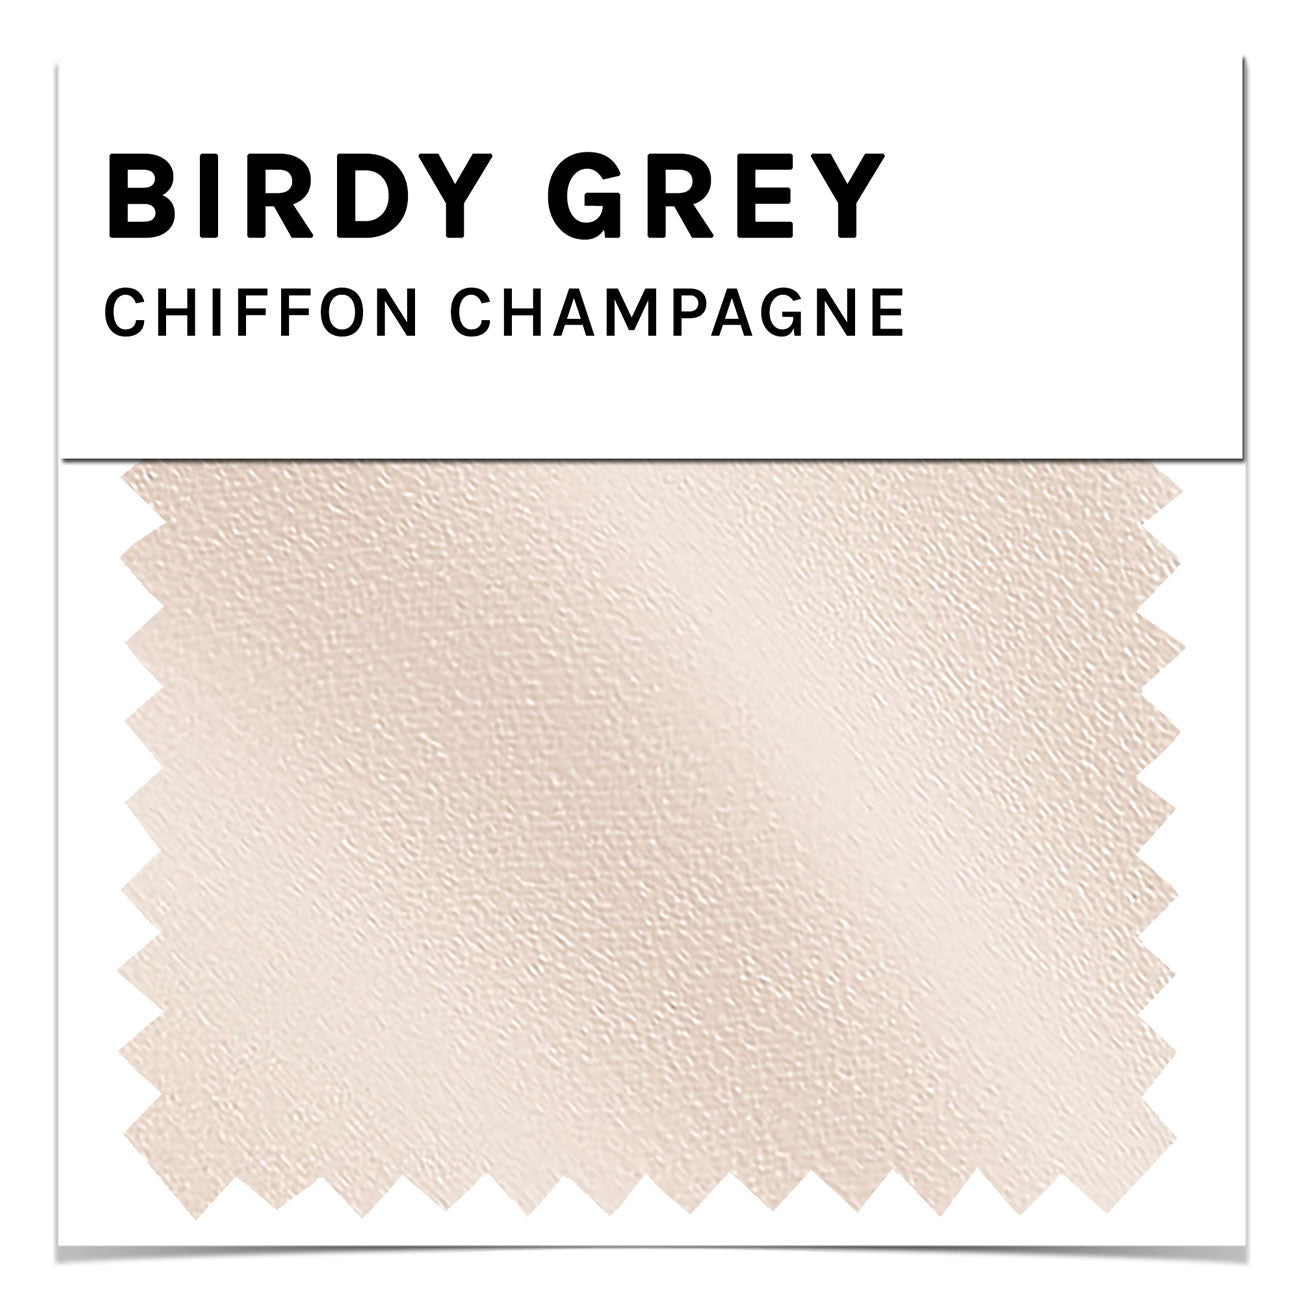 Chiffon Swatch in Champagne by Birdy Grey